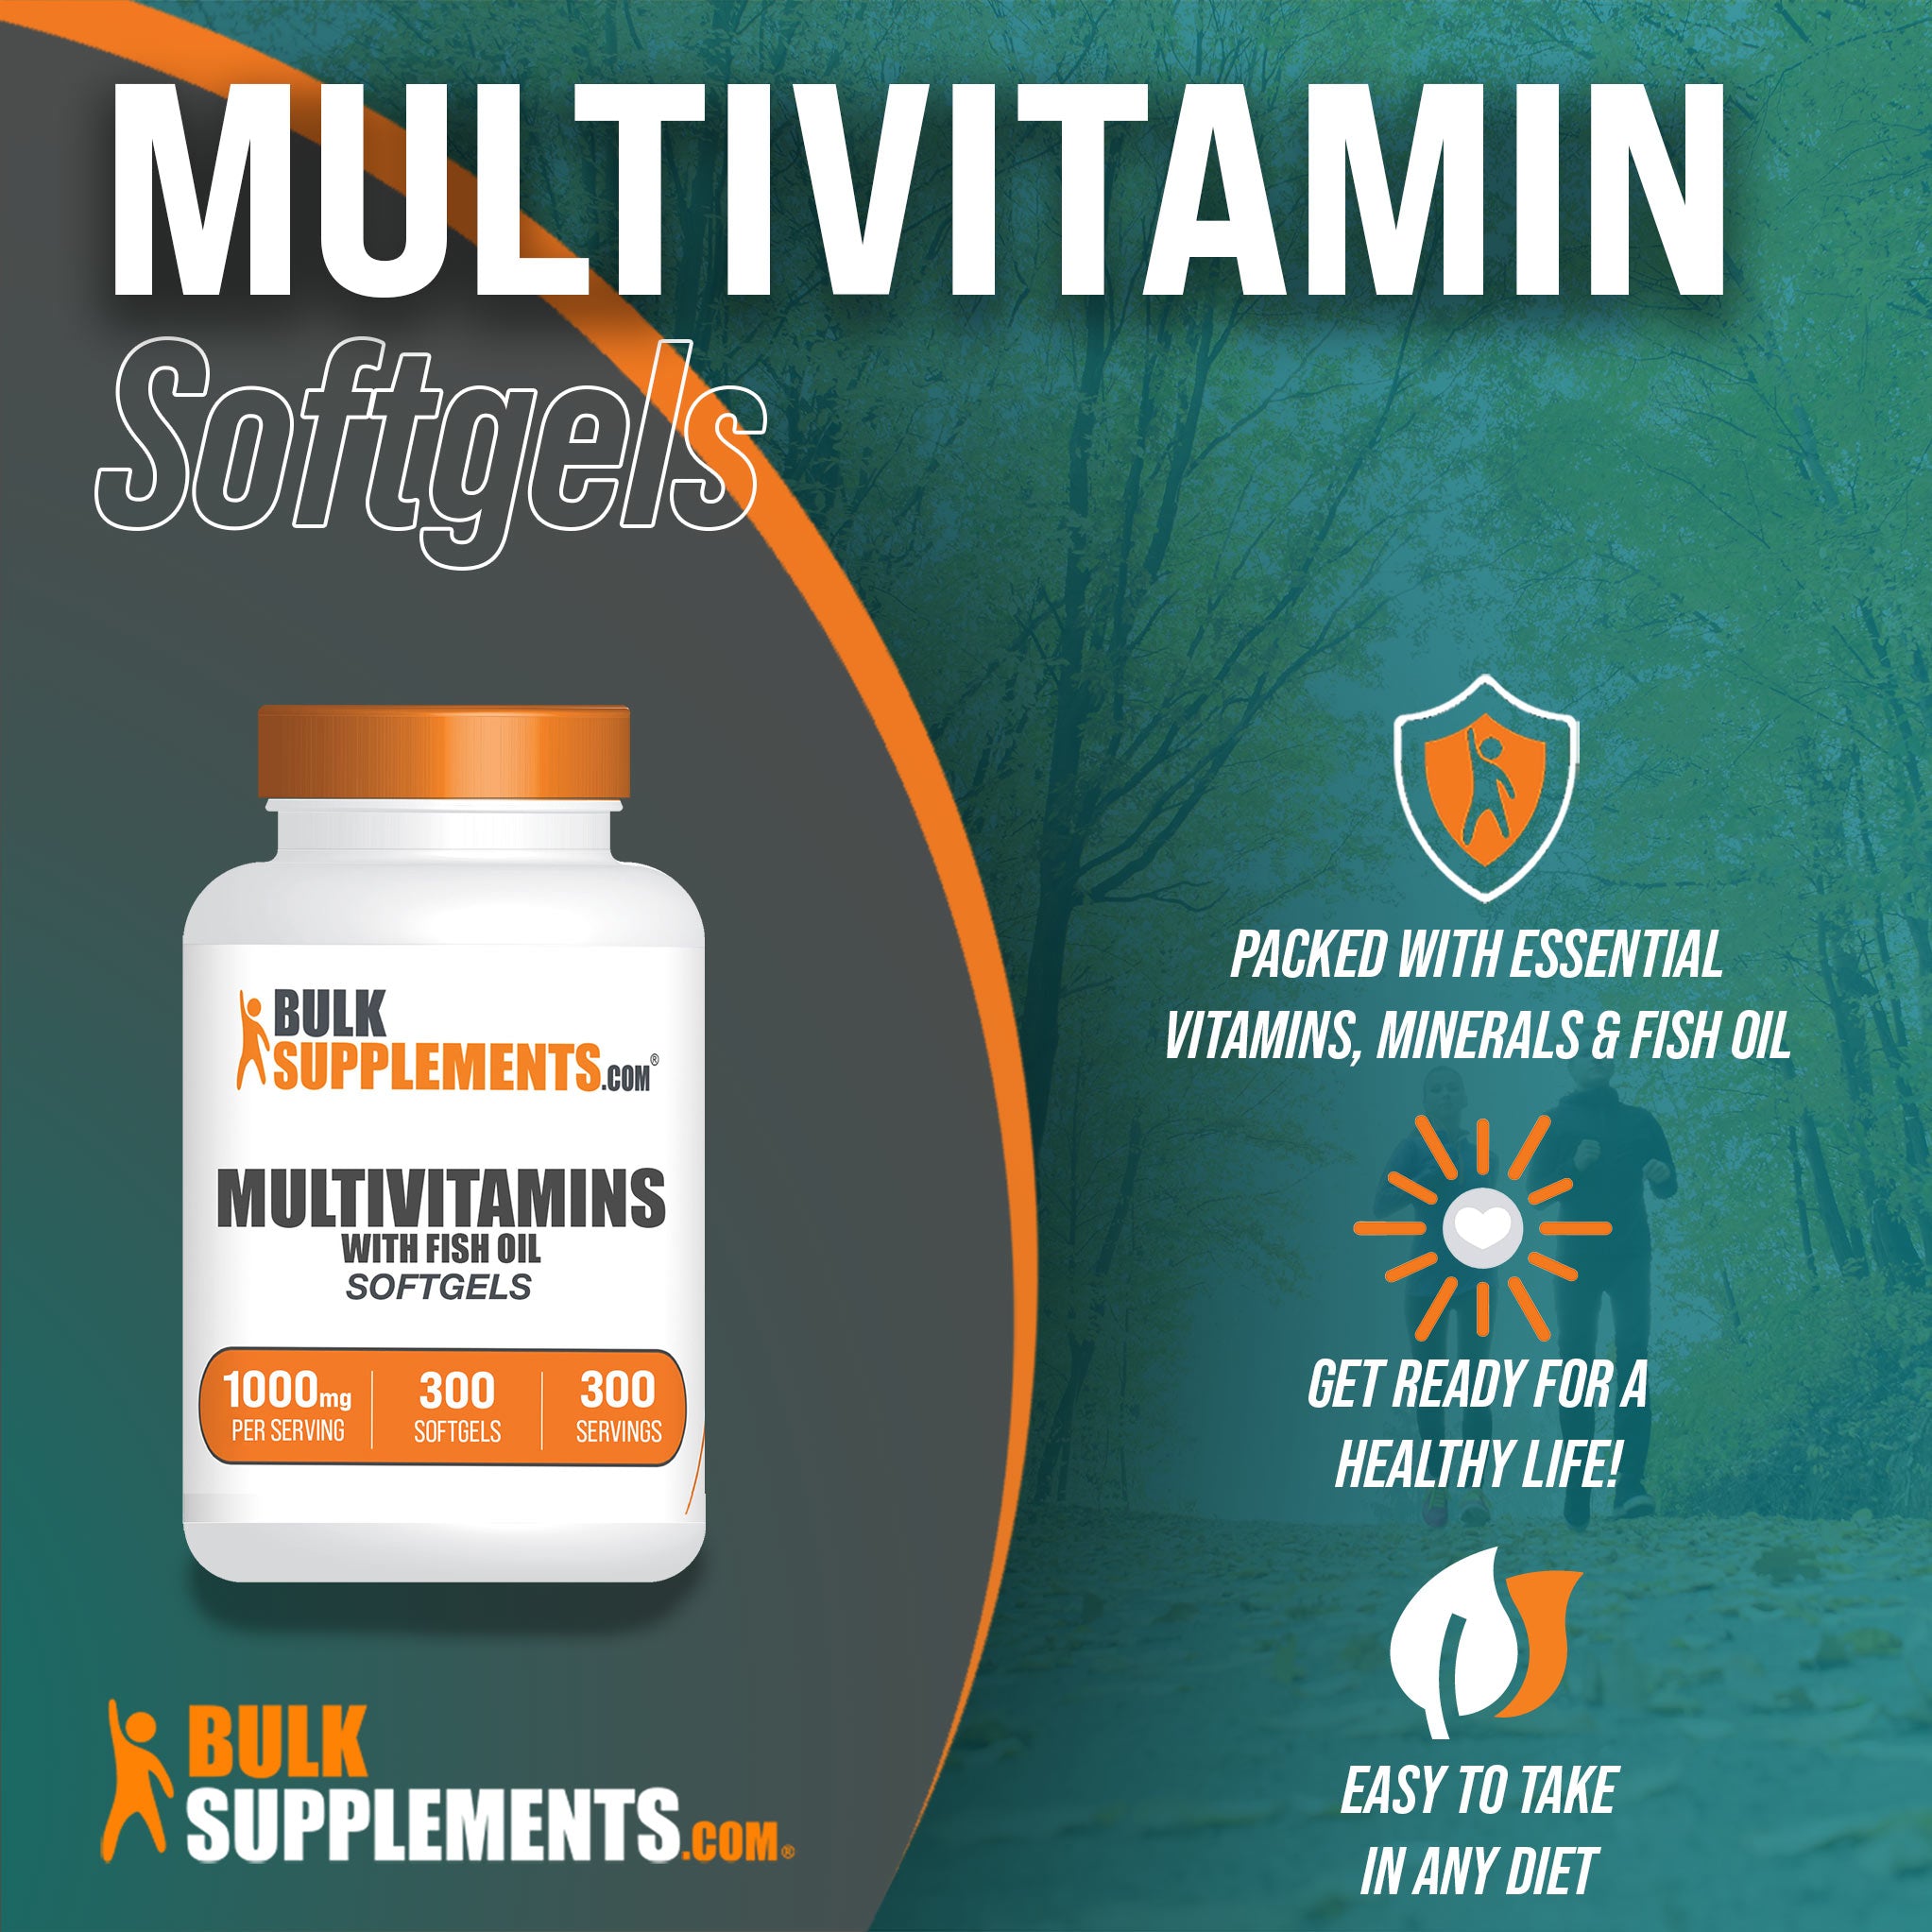 Multivitamin softgels benefits